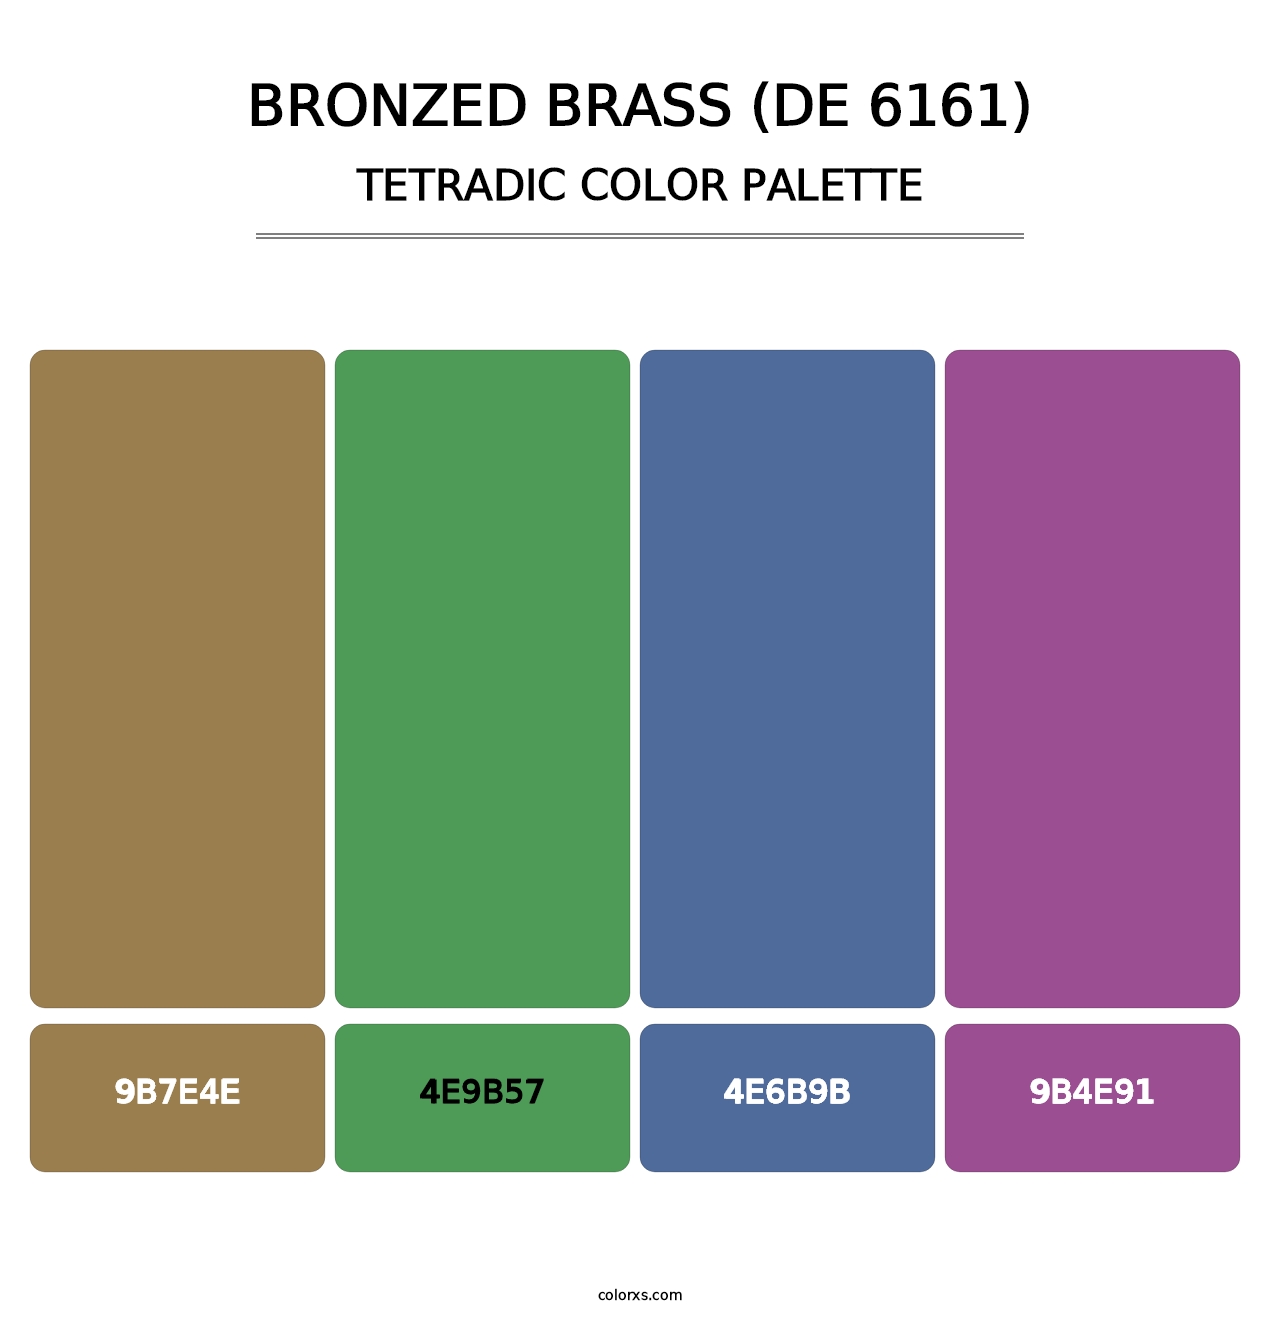 Bronzed Brass (DE 6161) - Tetradic Color Palette